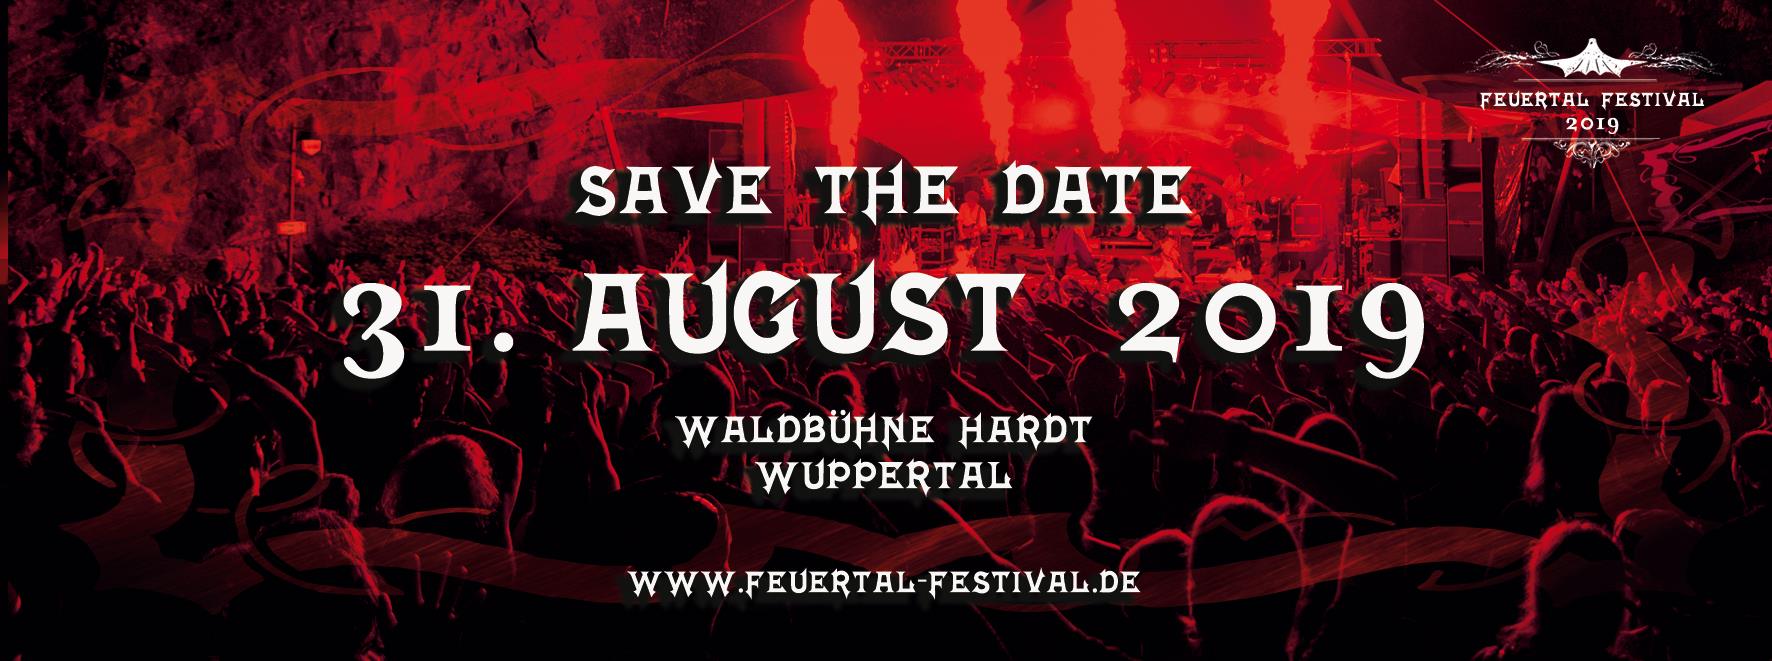 Vorbericht: Feuertal Festival 2019 im Wuppertal